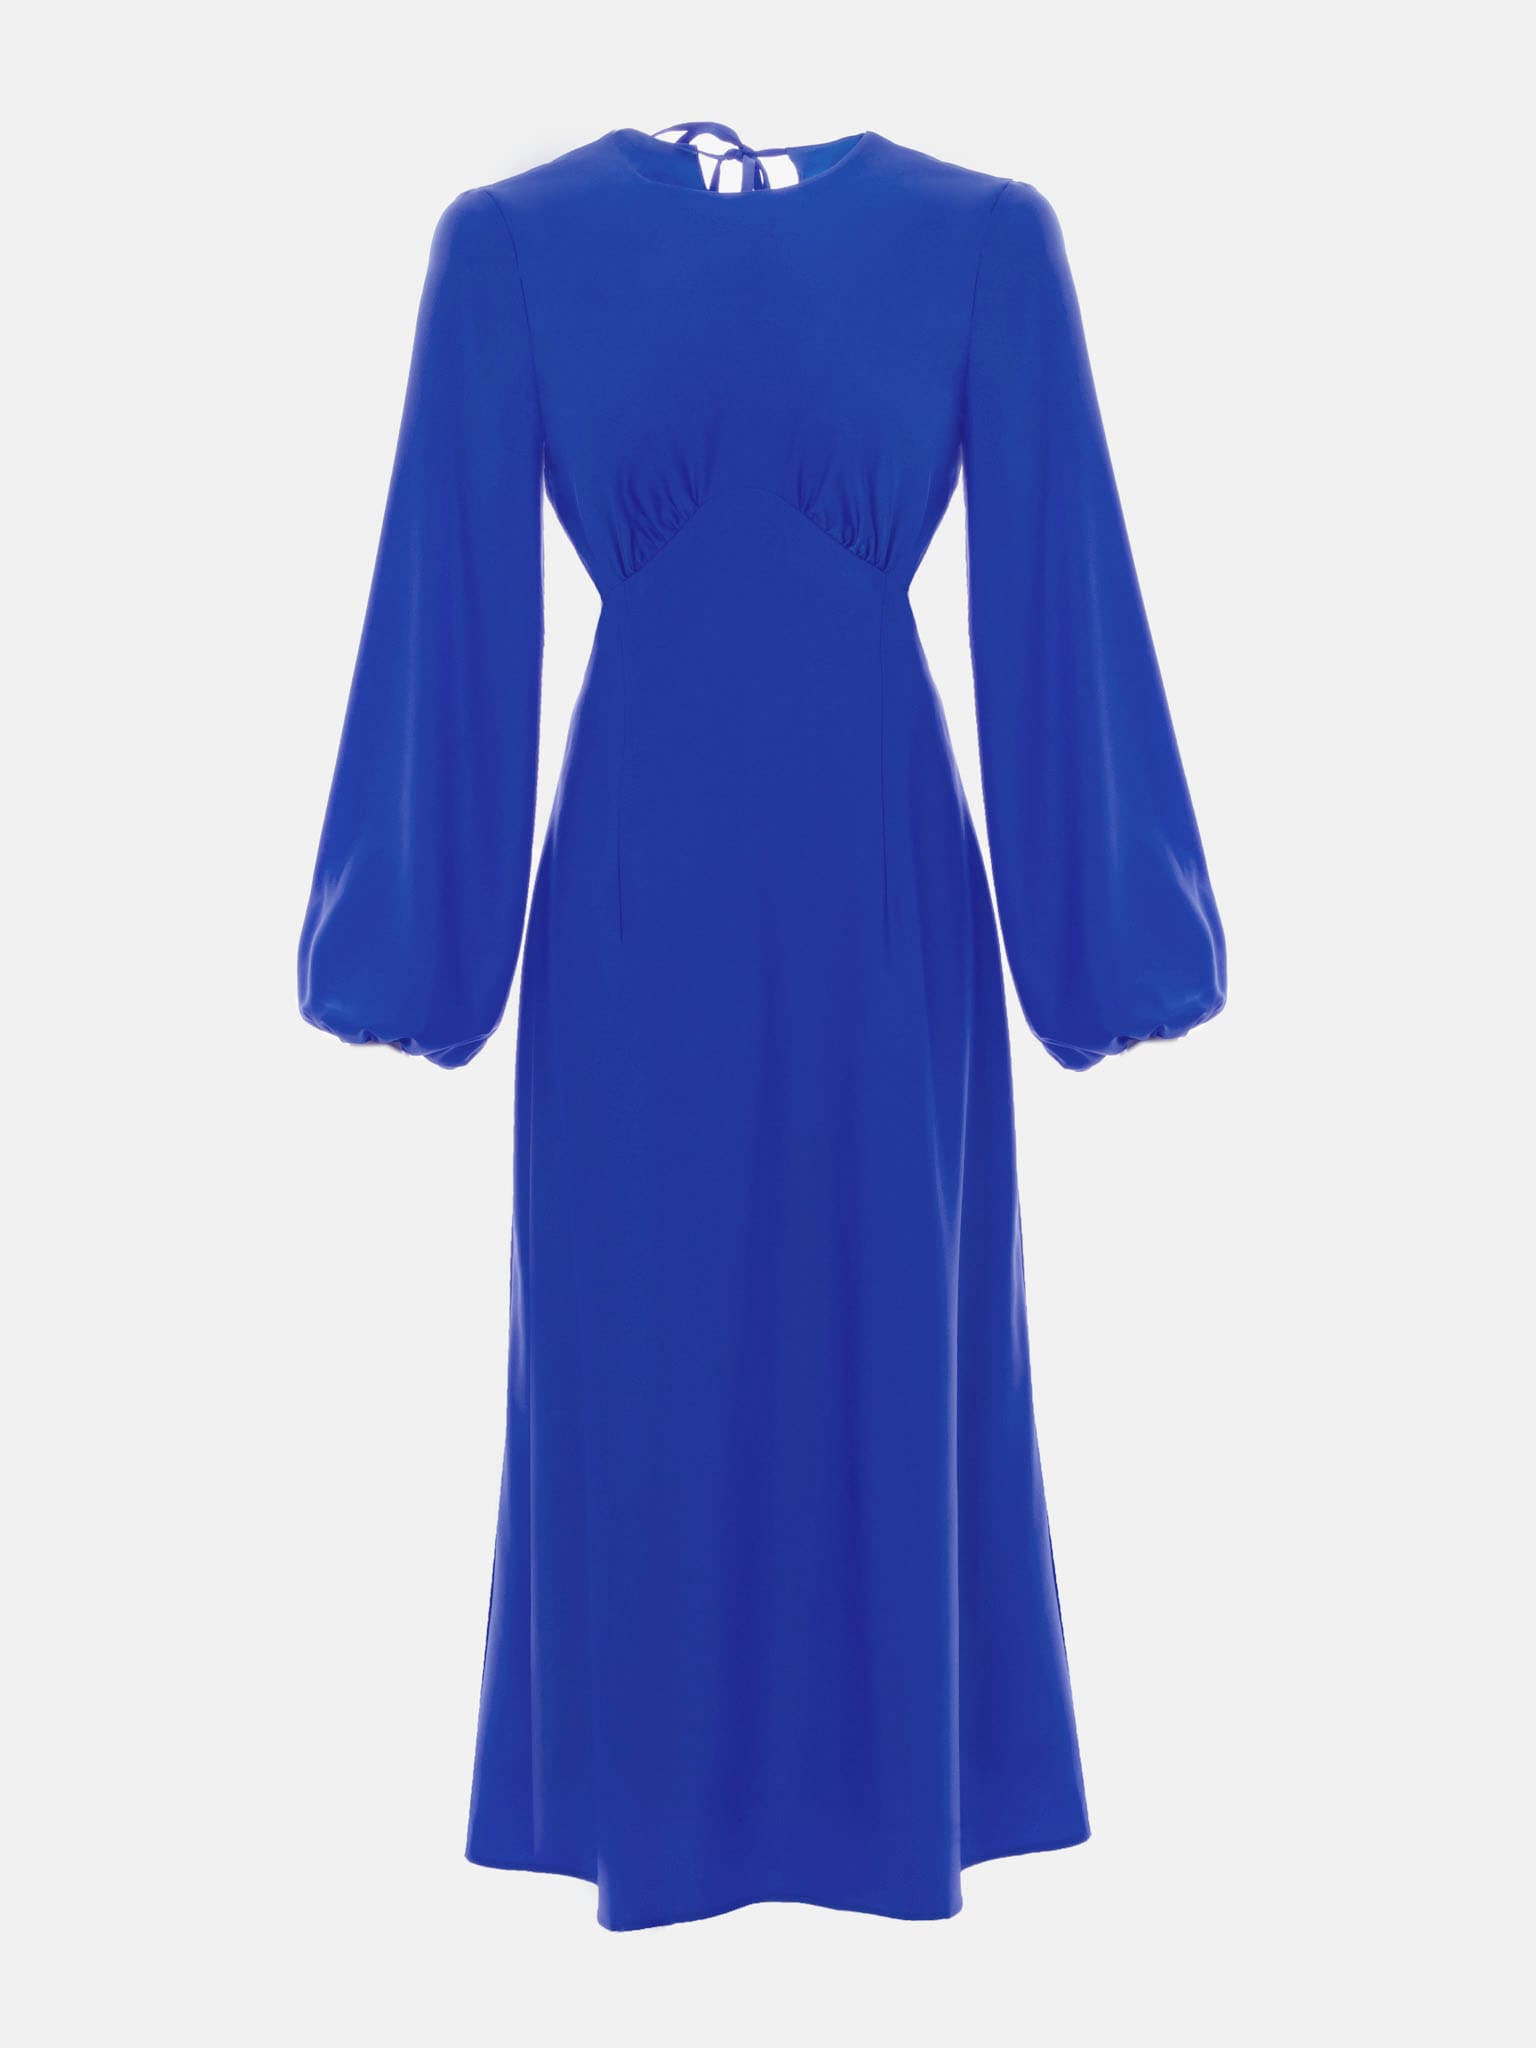 Midi dress with cutouts at the waist :: LICHI - Online fashion store